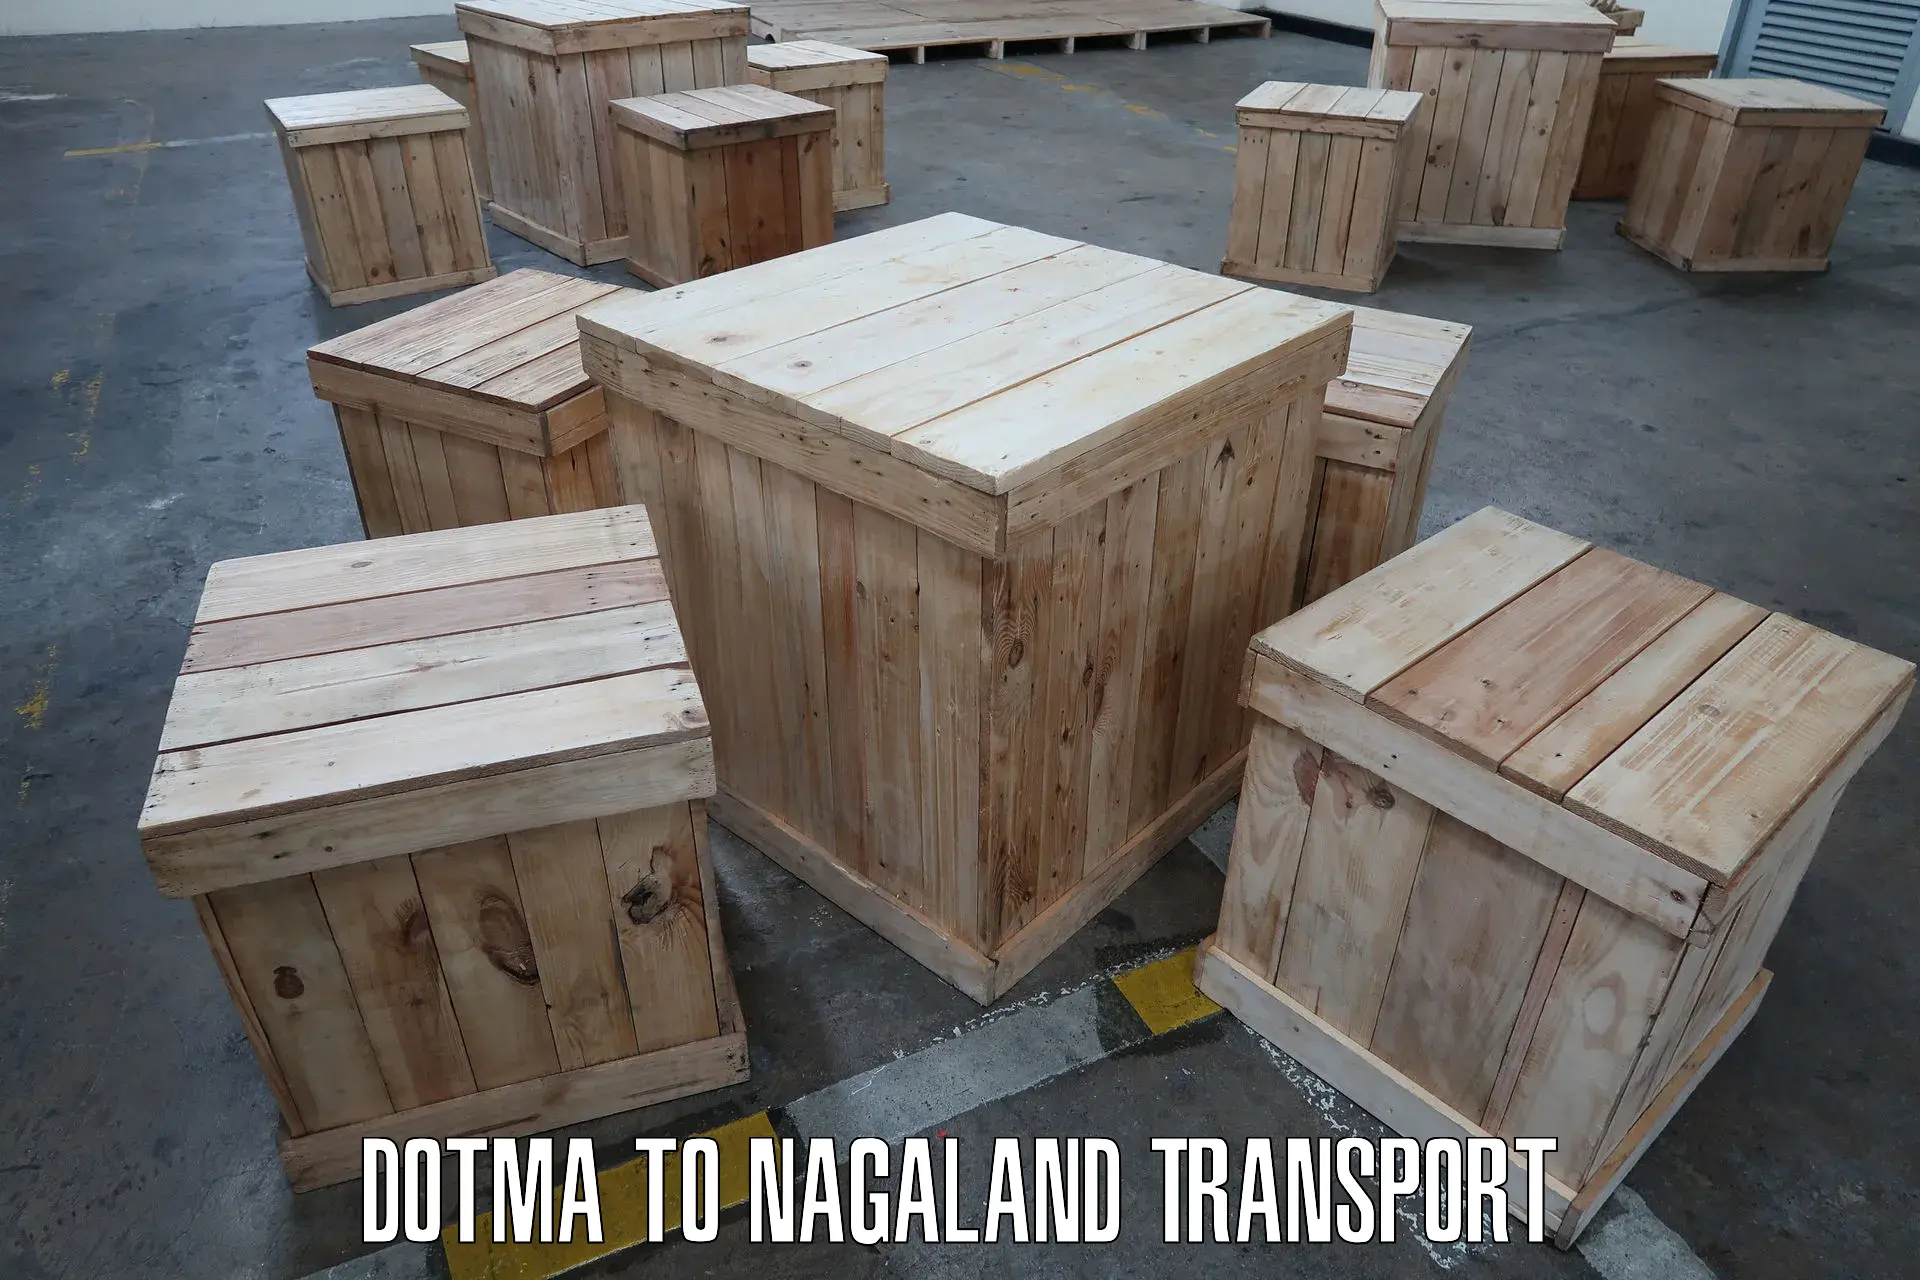 Furniture transport service Dotma to Nagaland